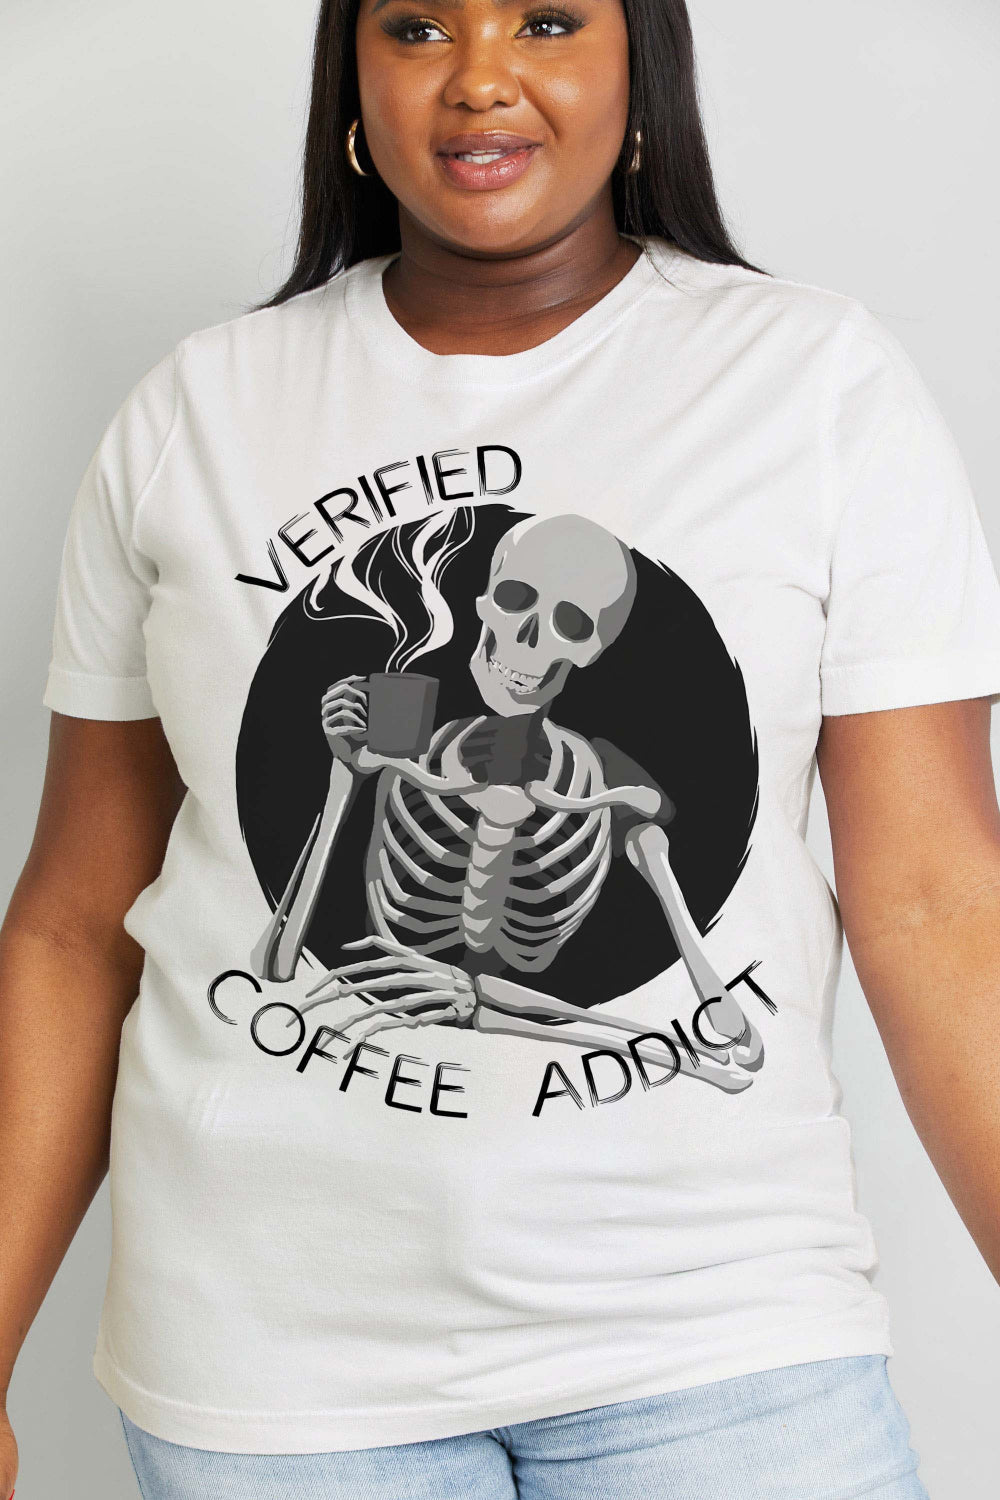 Women's Verified Coffee Addict Graphic Cotton Tee